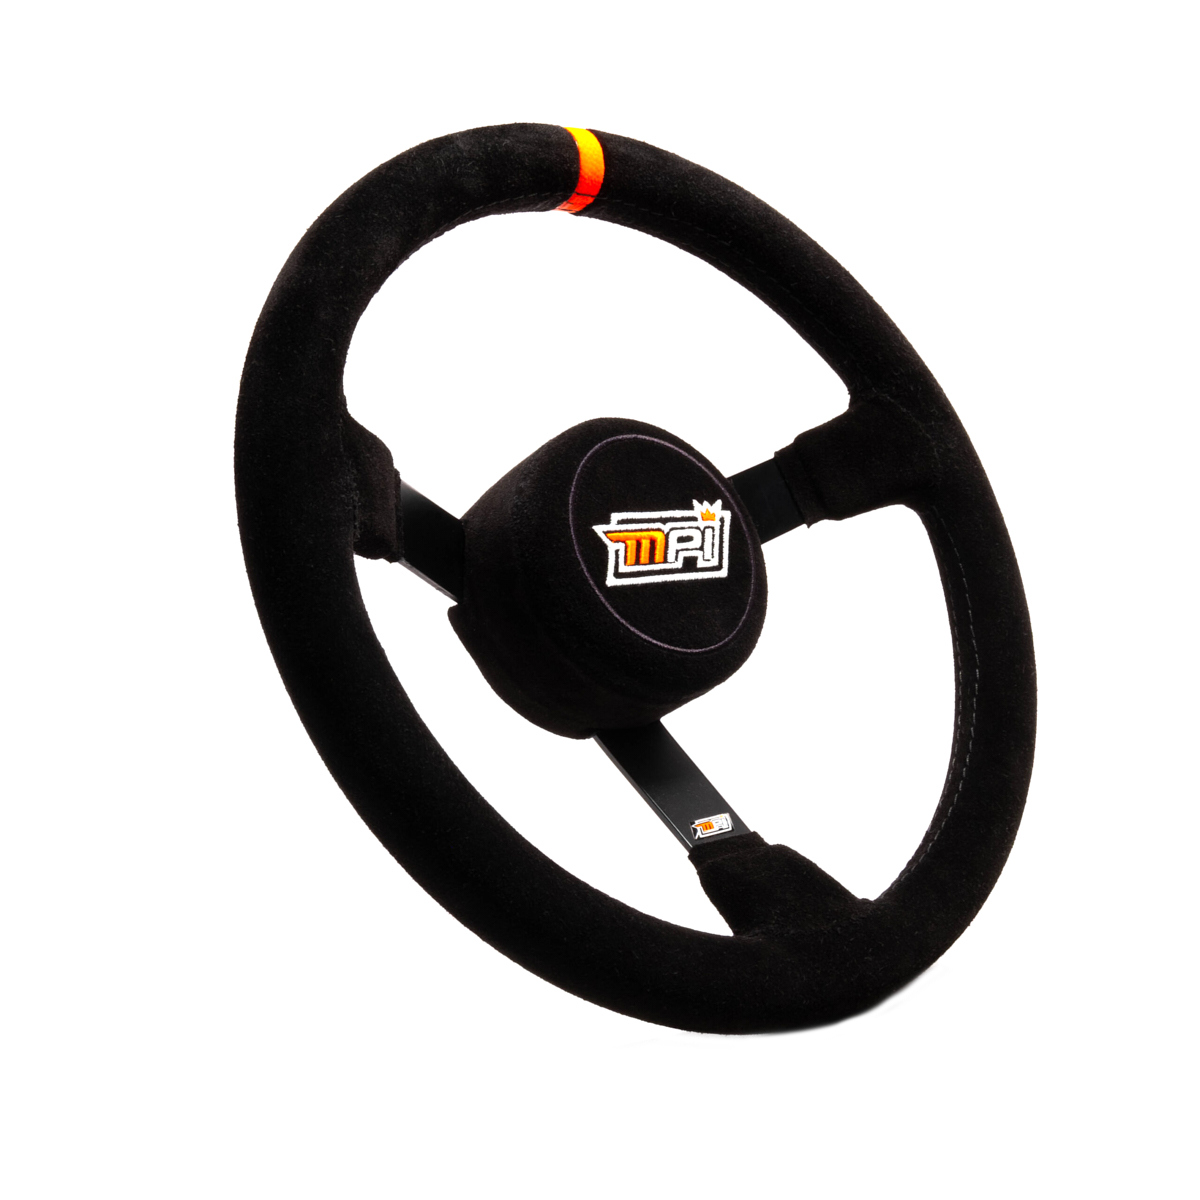 MPI USA MPI-MP-13 Steering Wheel, Stock Car, 13 in Diameter, 3 in Dish, 3-Spoke, Black Suede Grip, Orange Stripe, Steel, Black Anodized, Each